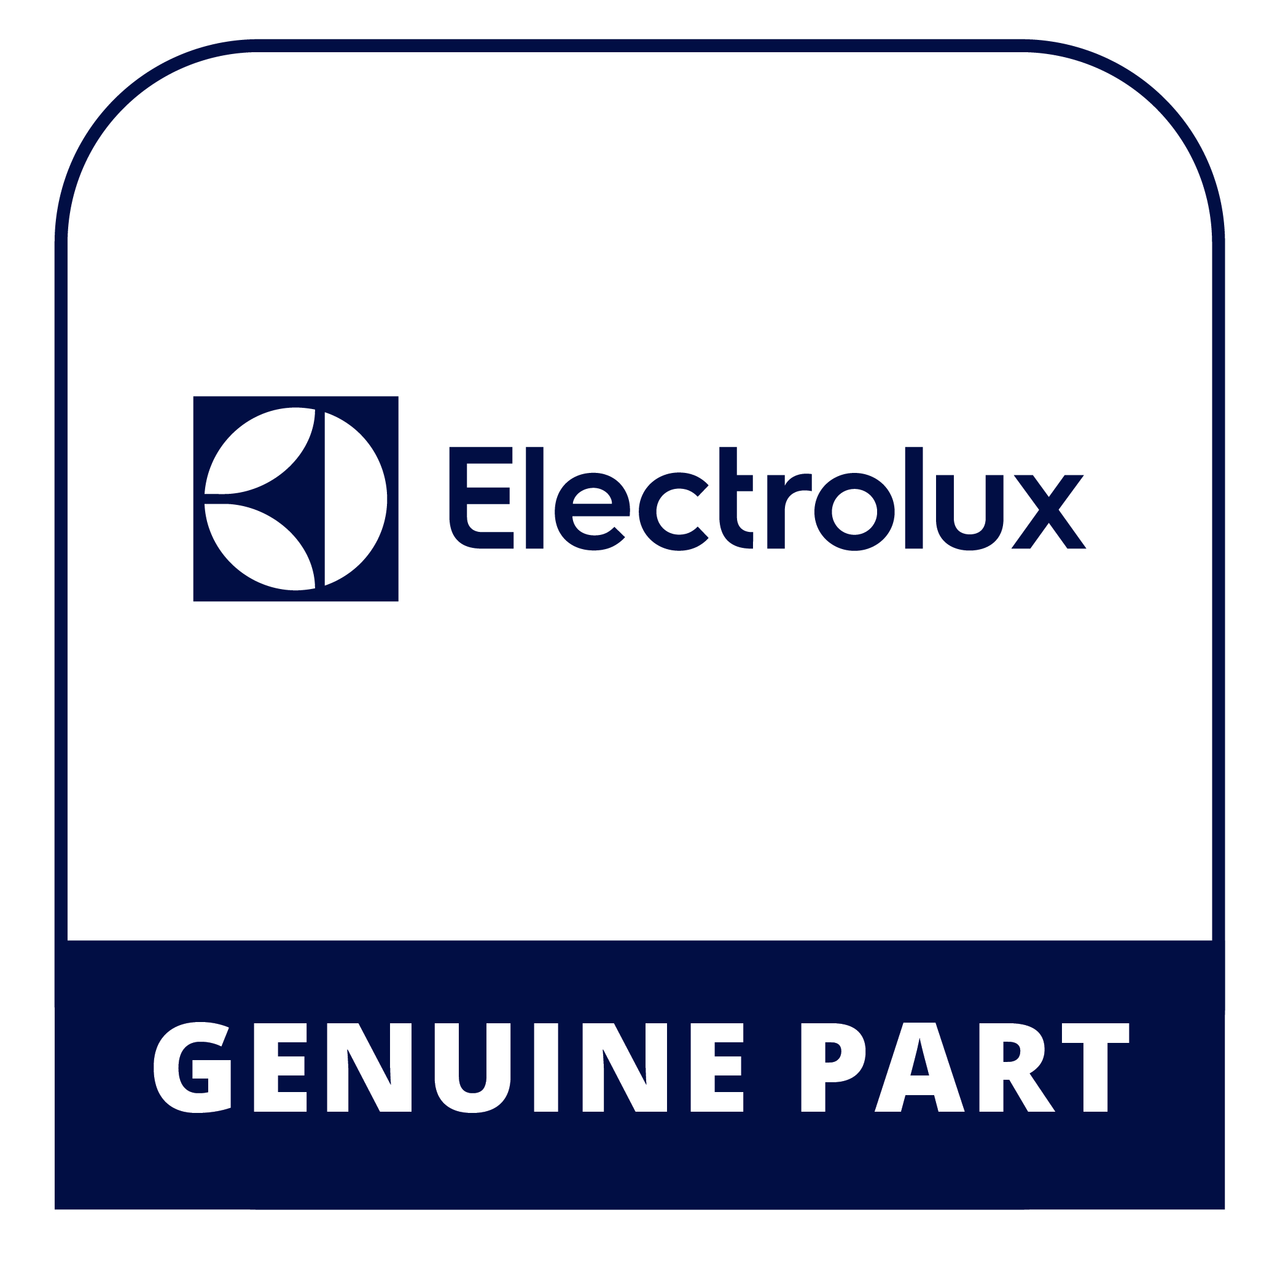 Frigidaire - Electrolux 318325200 Overlay - Genuine Electrolux Part